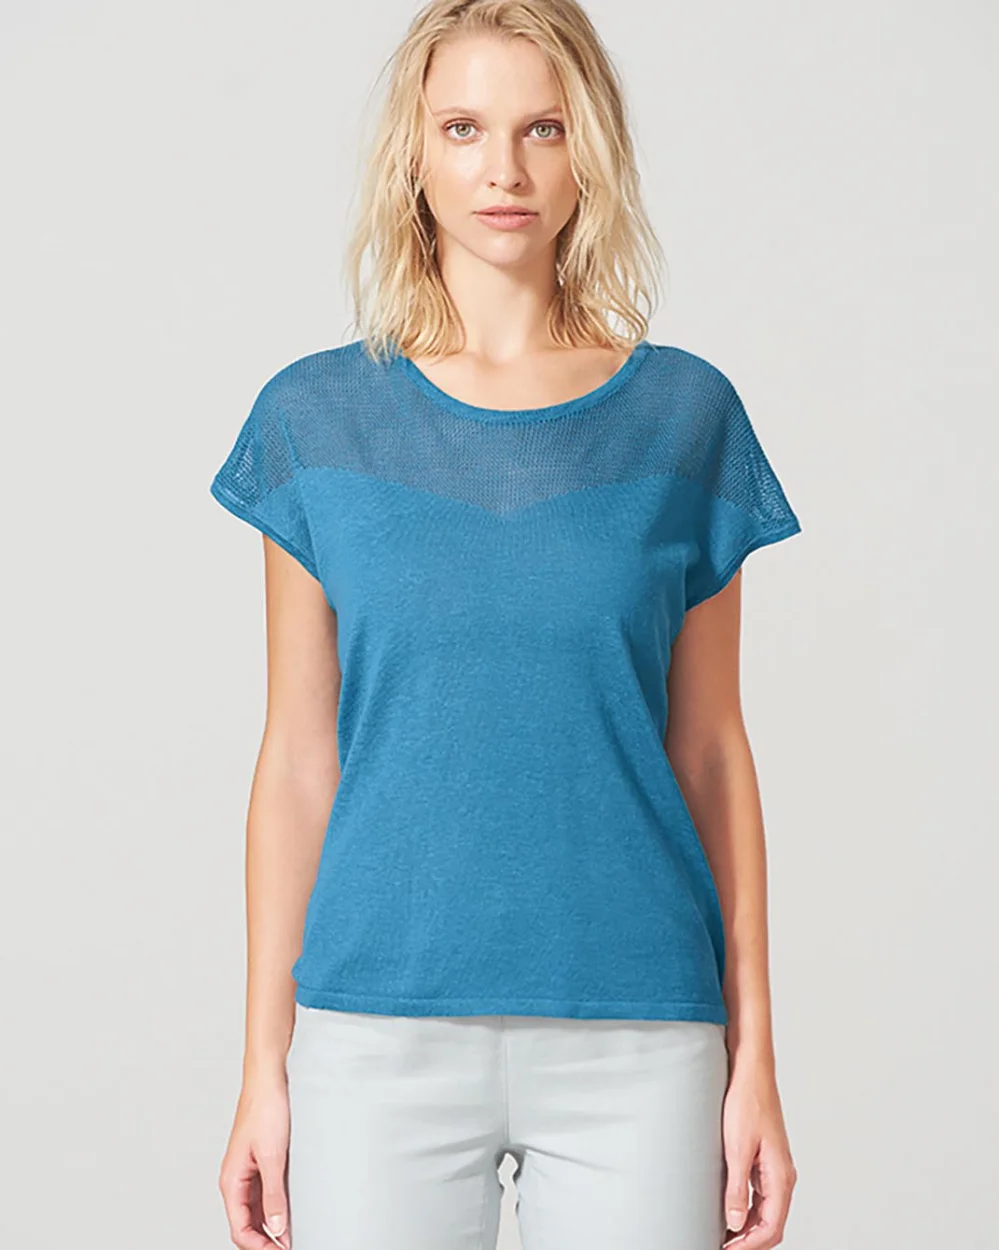 Women's knitted T-shirt in Hemp and Organic Cotton